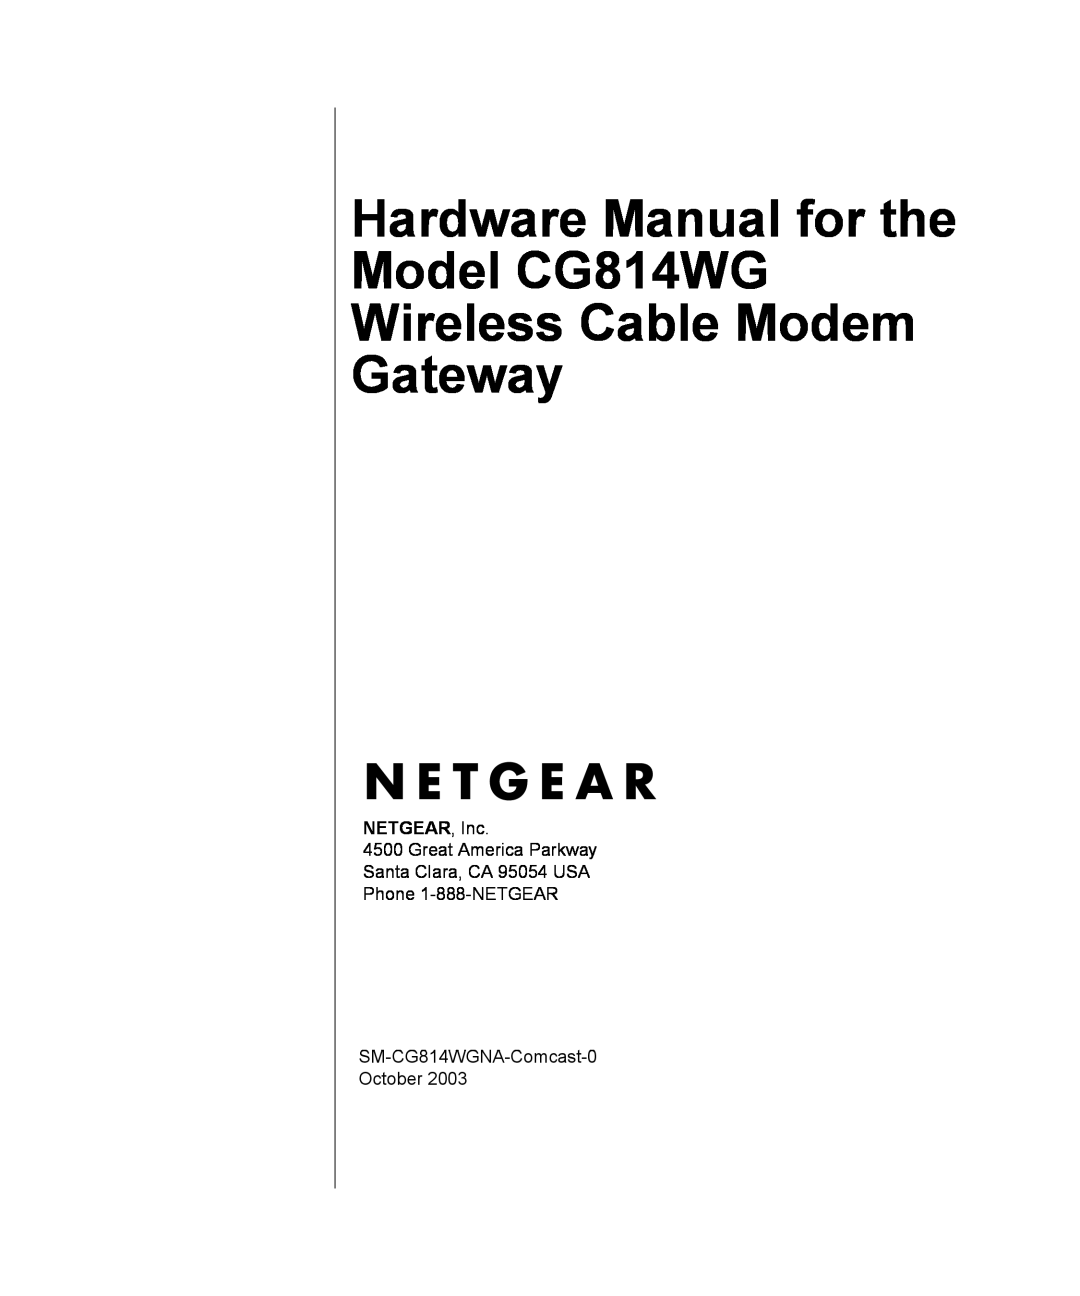 NETGEAR manual Hardware Manual for the Model CG814WG Wireless Cable Modem Gateway, NETGEAR, Inc 